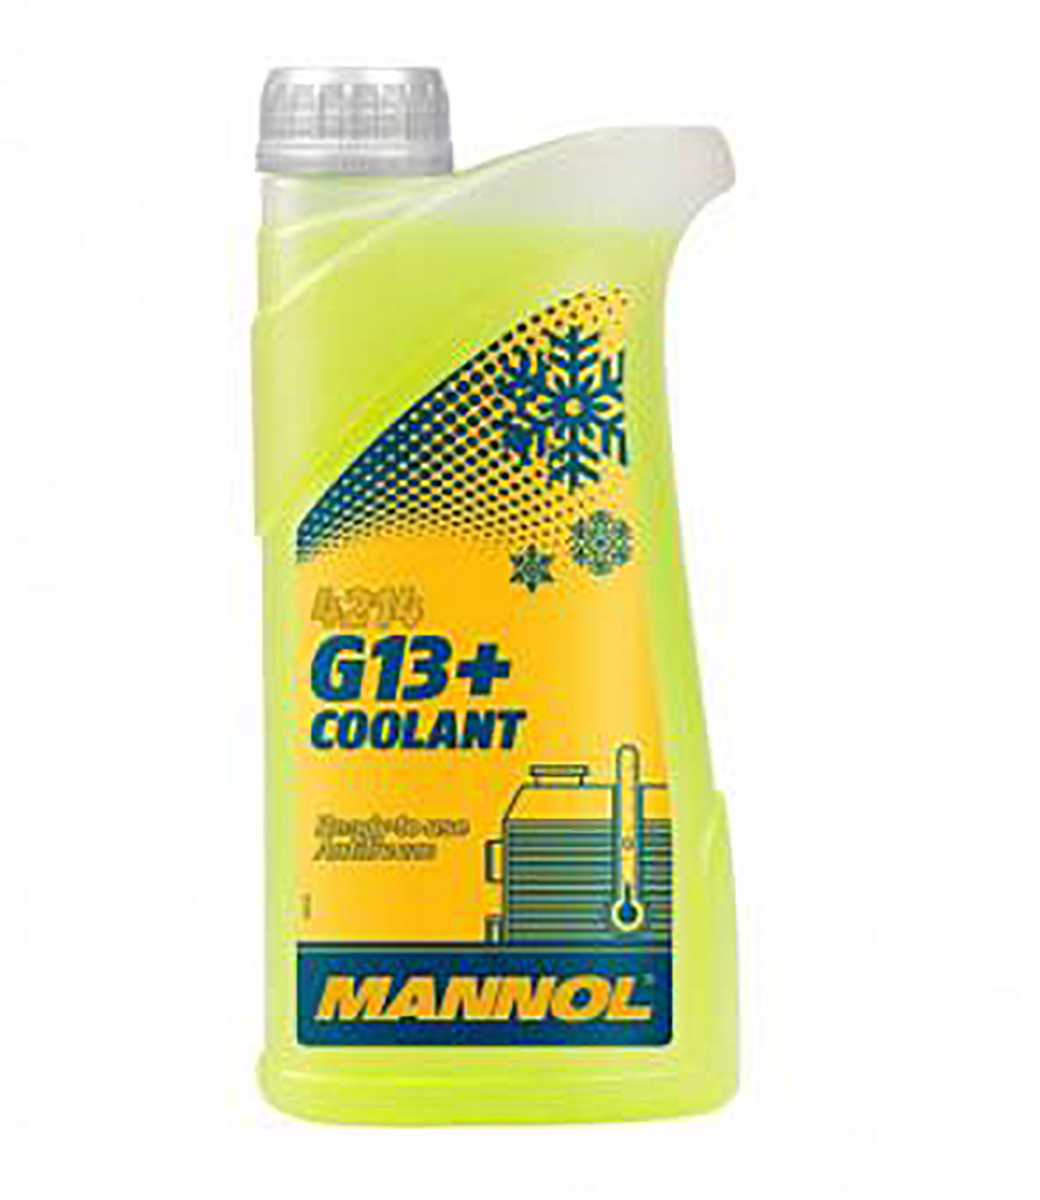 Coolant G13+